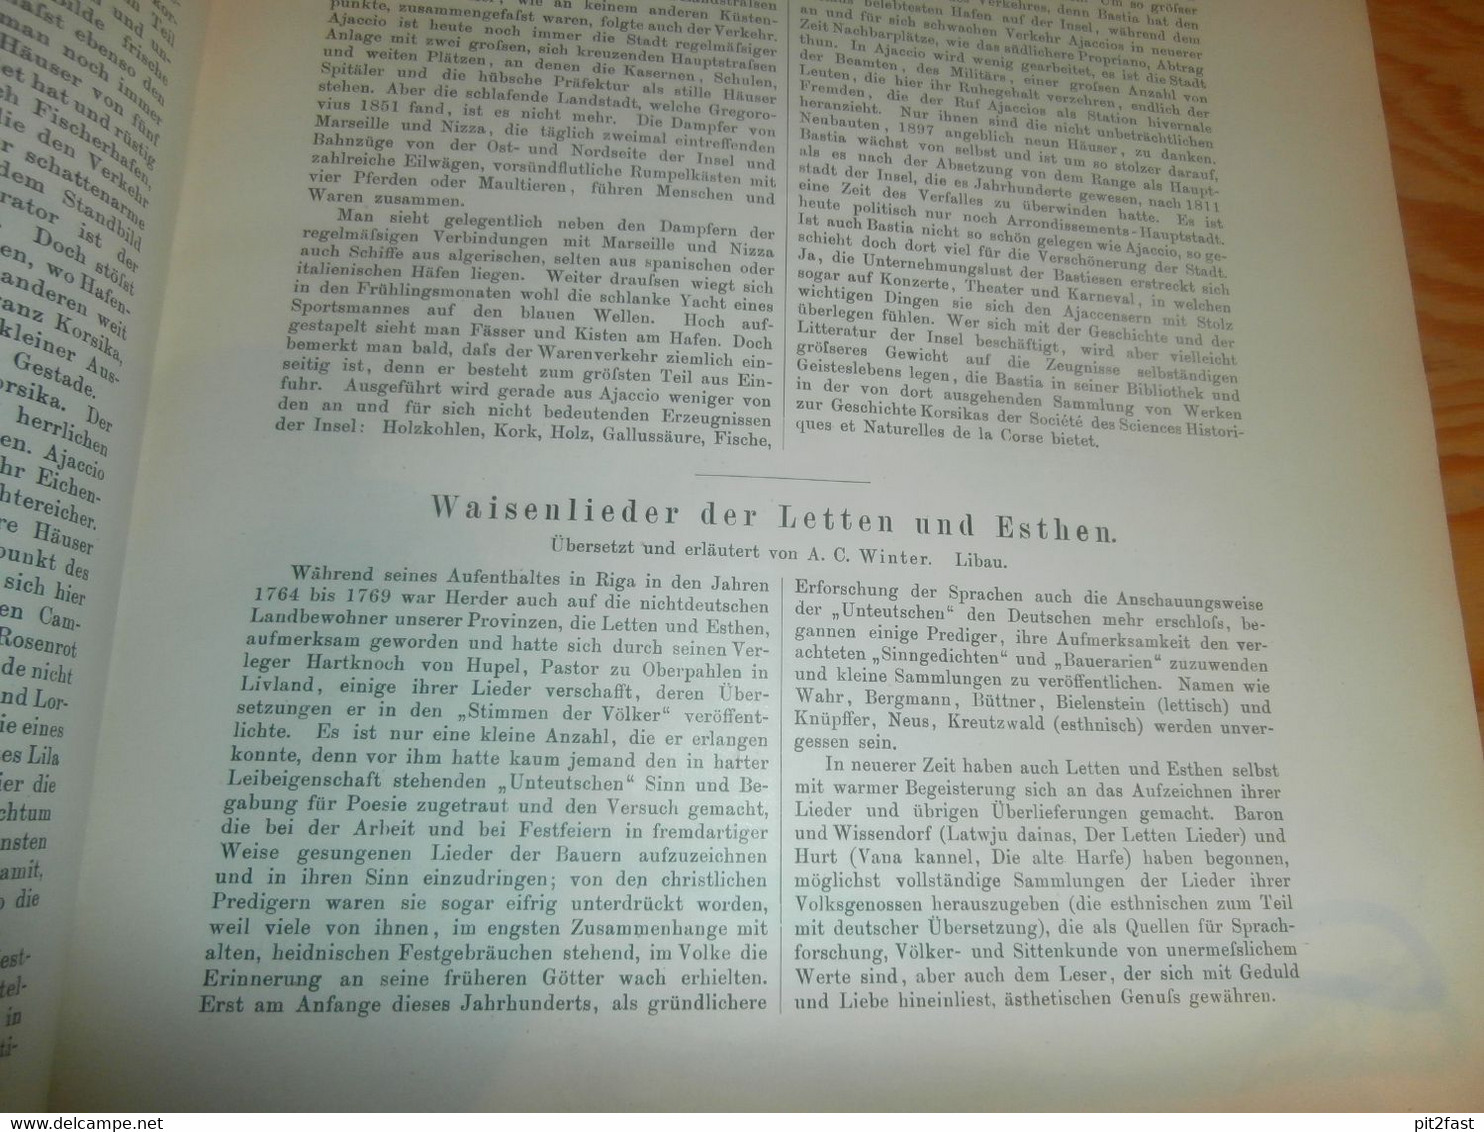 Völkerkunde Juli-Dezember 1899, gebundene GLOBUS Zeitschriften , Expedition , Kolonie , Reise , Berichte , Etnologie  !!